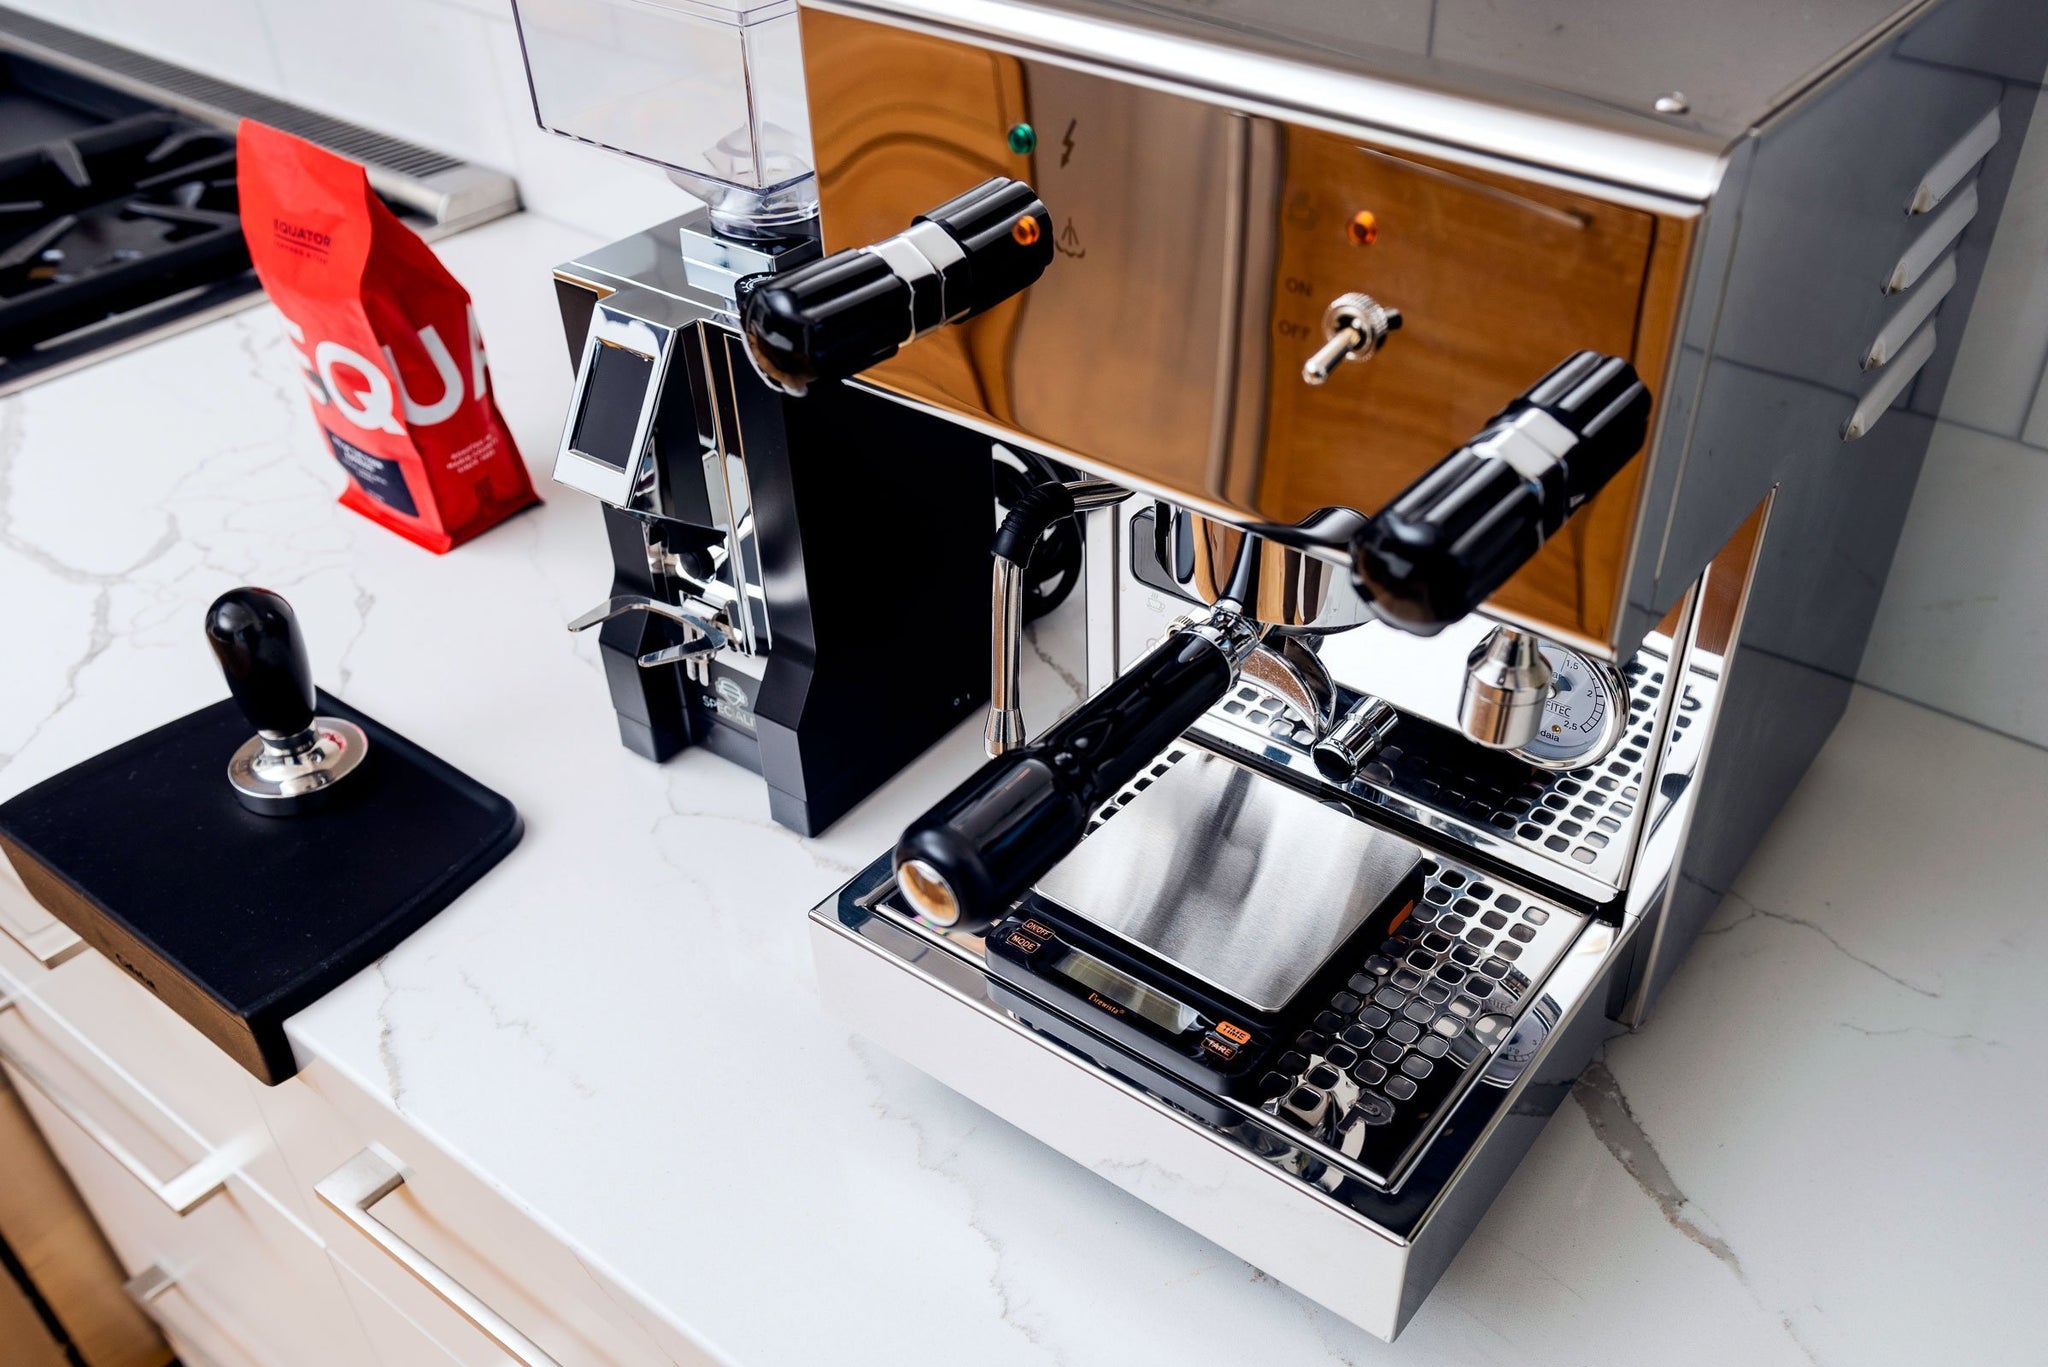 Profitec Pro 300 Espresso Machine Overview